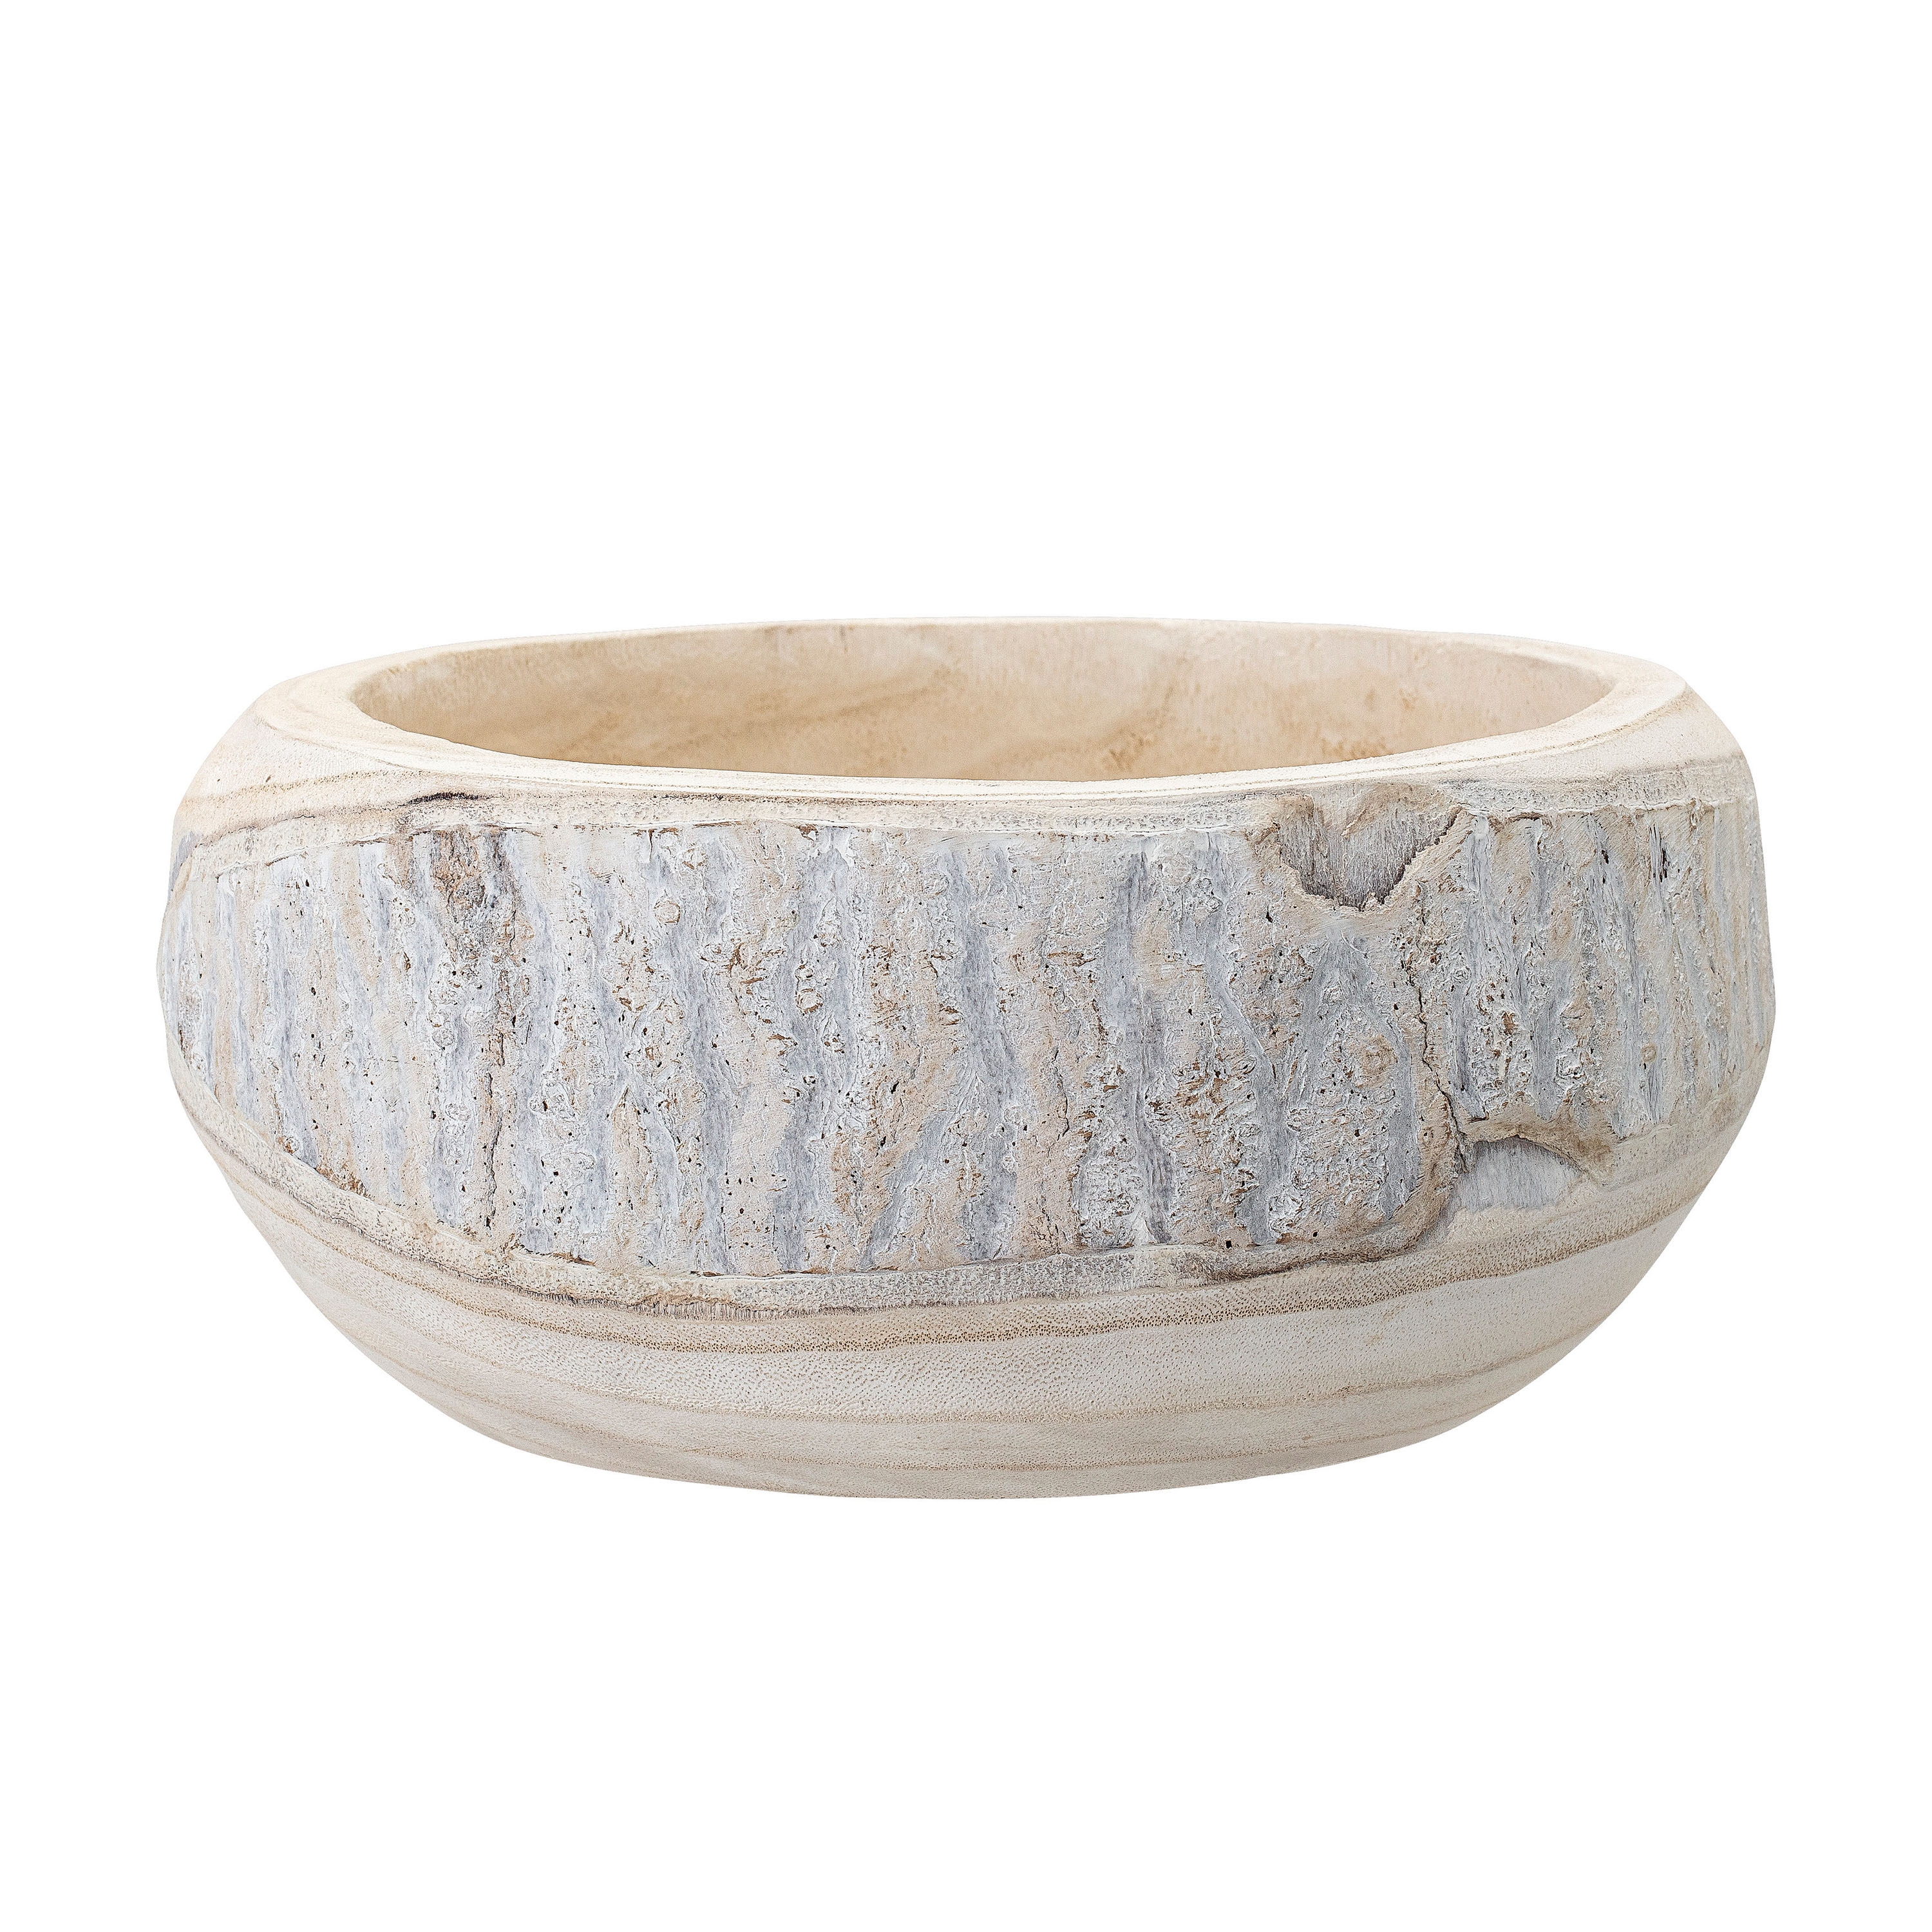 Hand-Carved Paulownia Wood Pot with Whitewashed Finish - Image 0